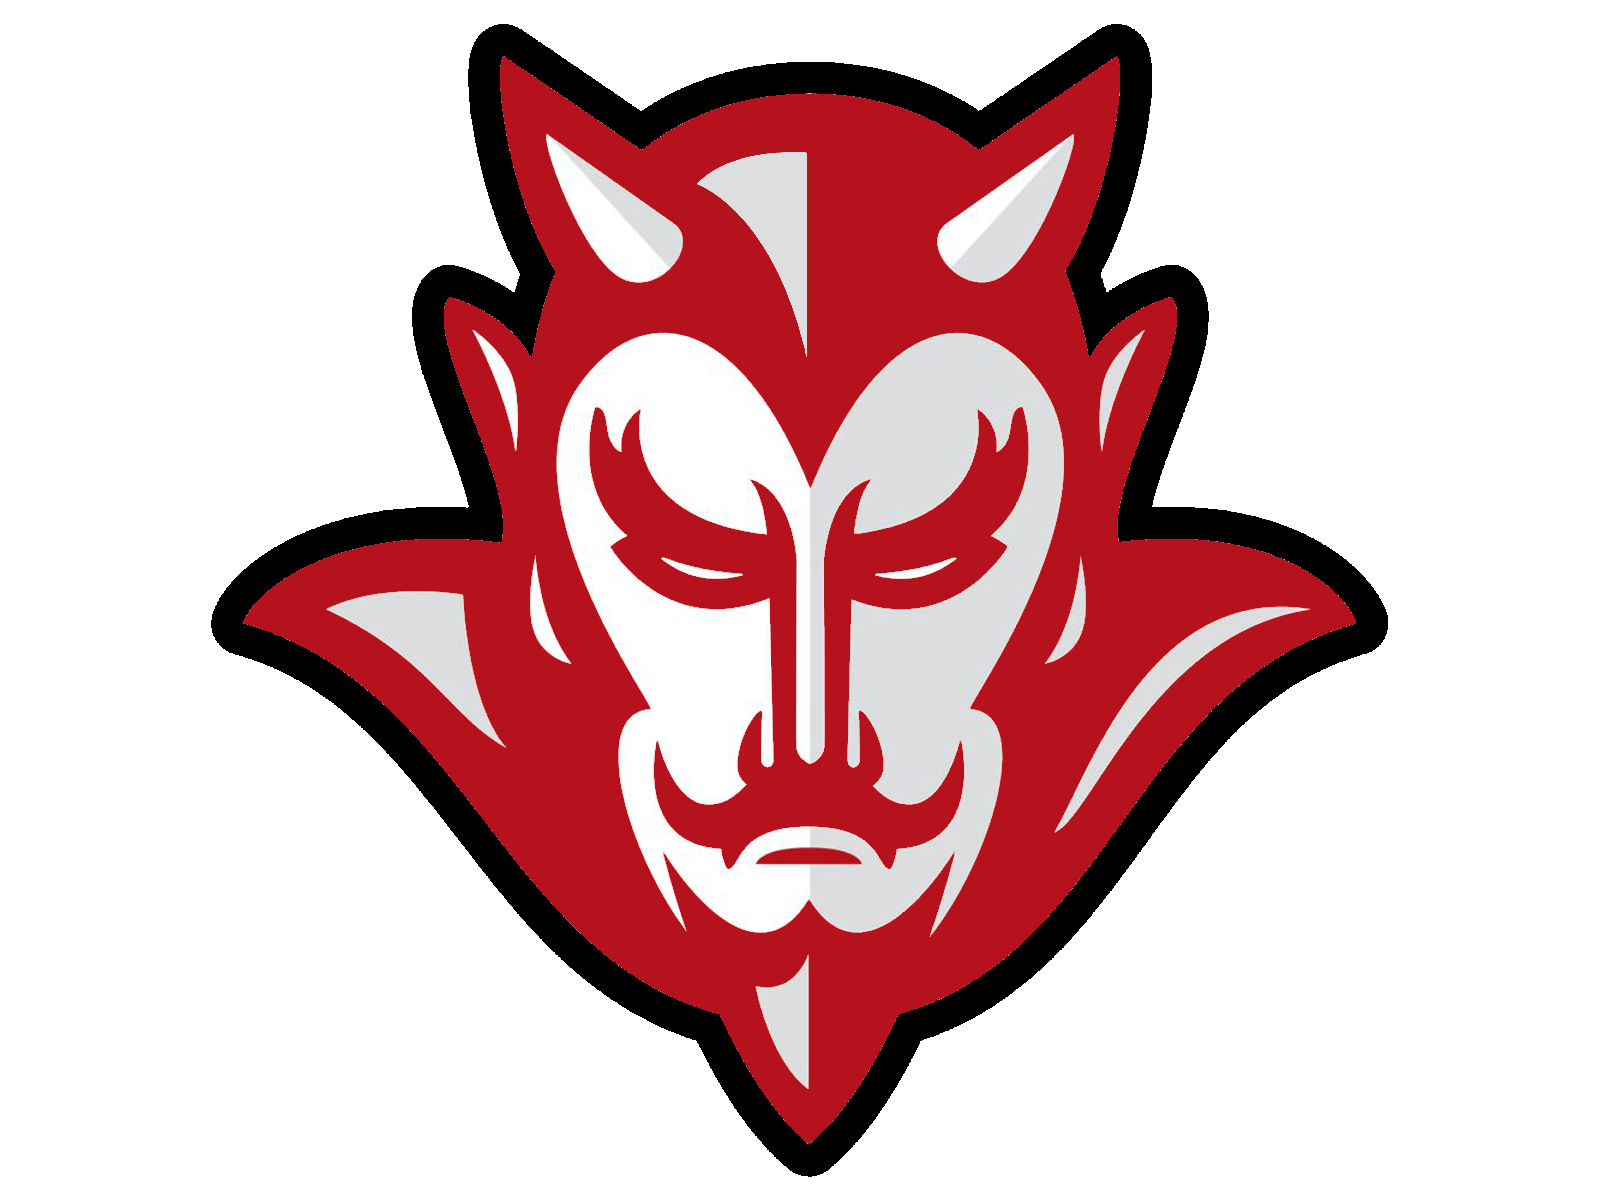 For School Red Devils Logo - The Calhoun Red Devils